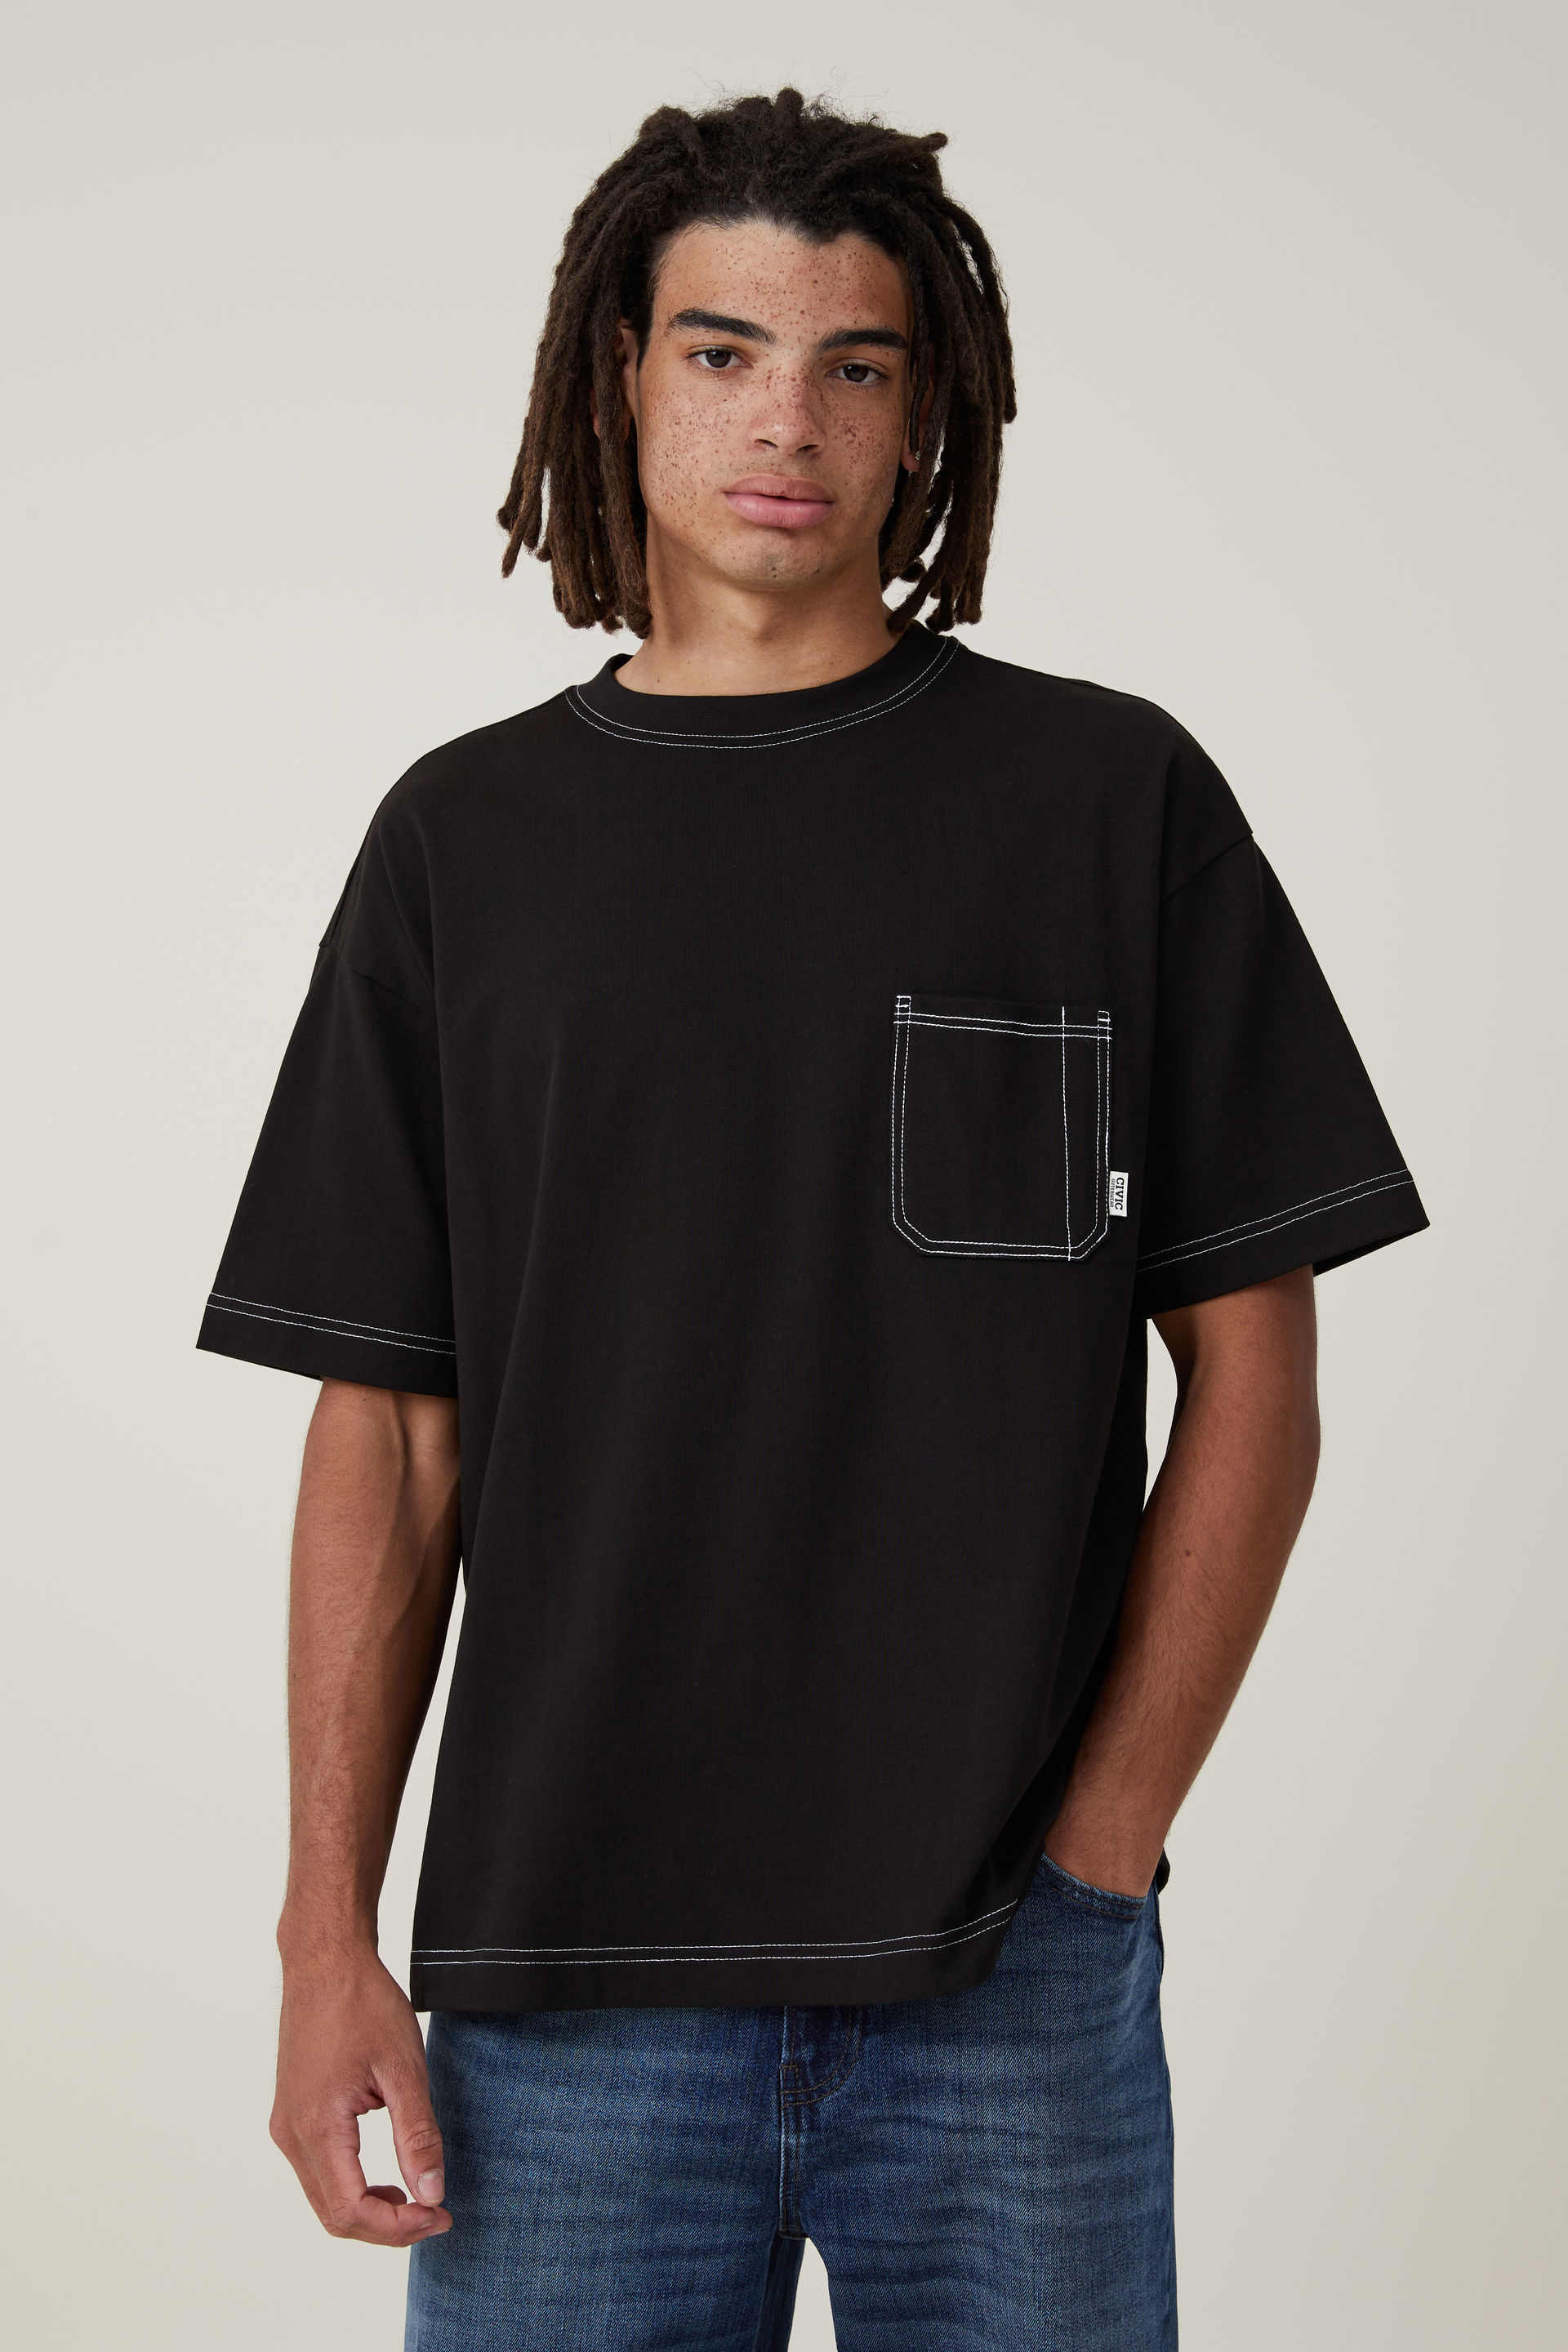 Cotton On Men - Box Fit Pocket T-Shirt - Black / civic contrast